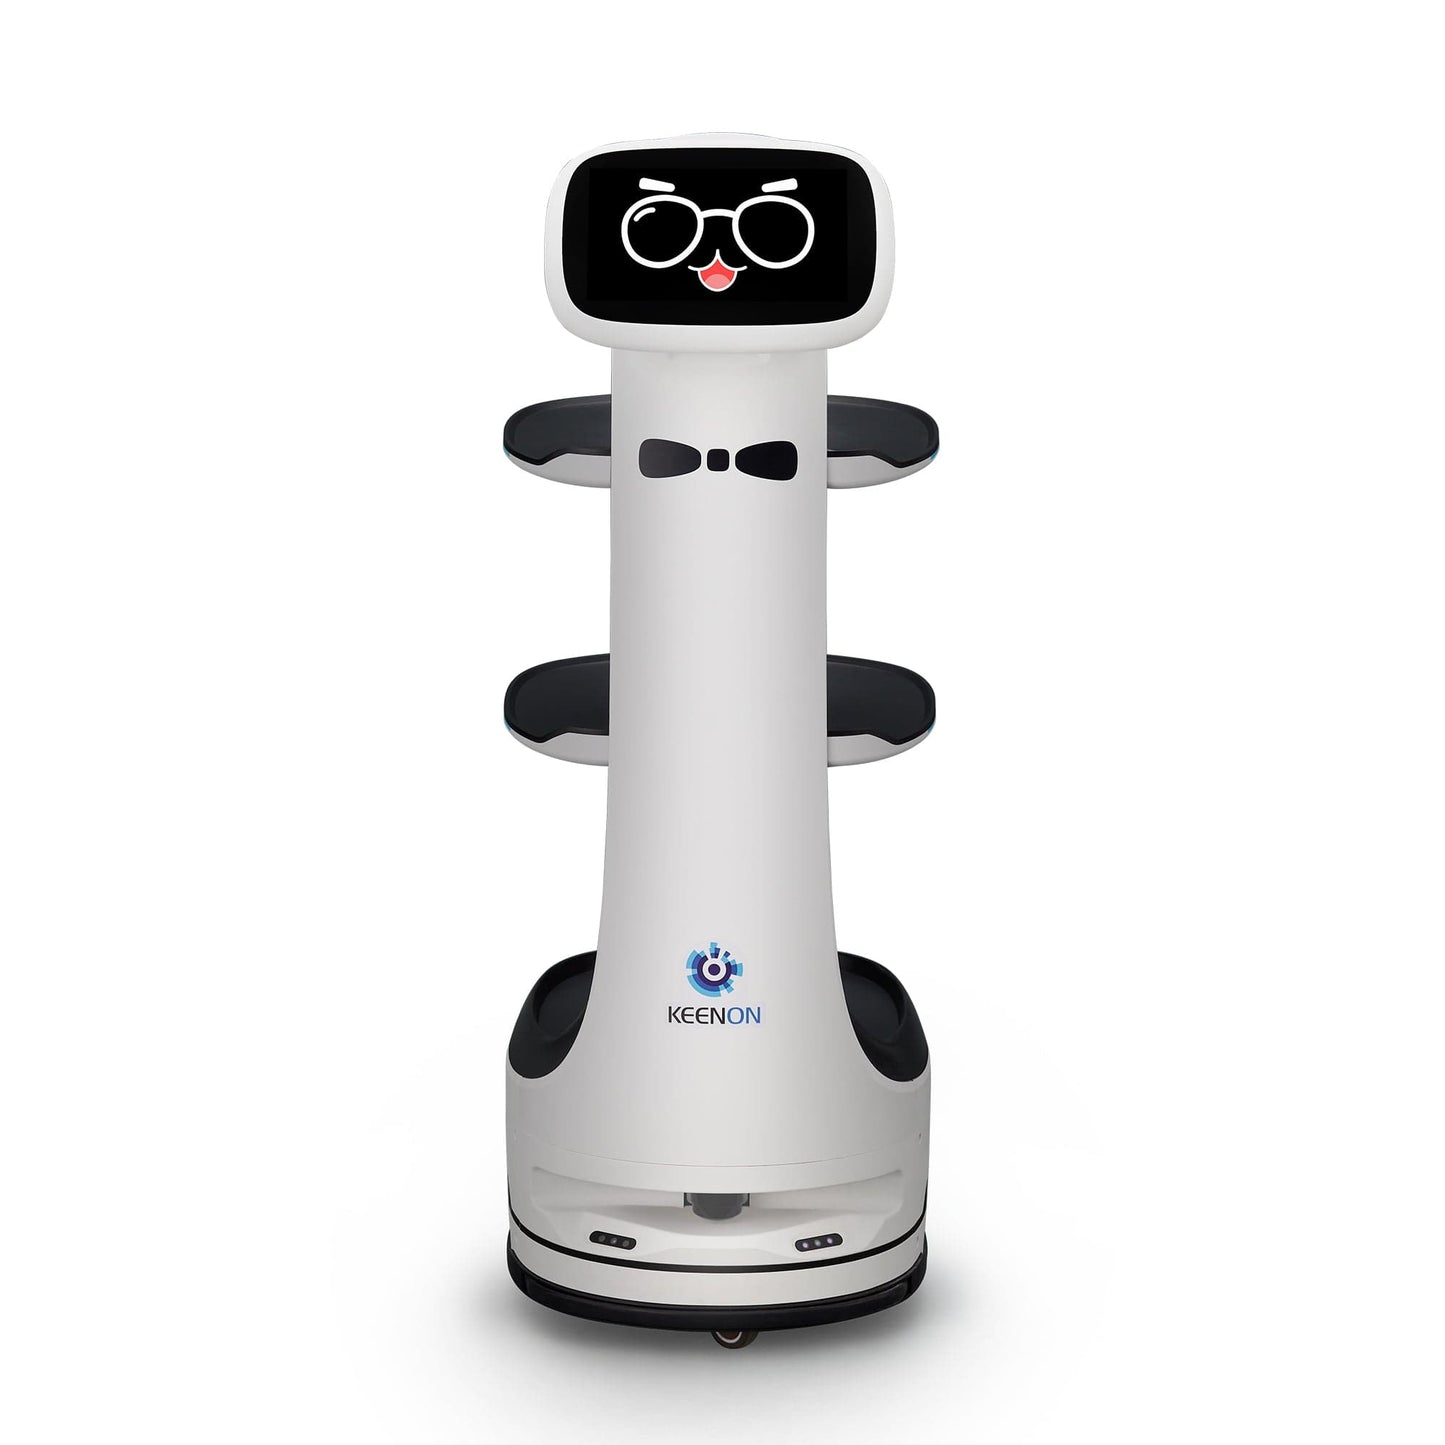 Keenon Robot Dinetbot T8 - Advanced Smart Robot